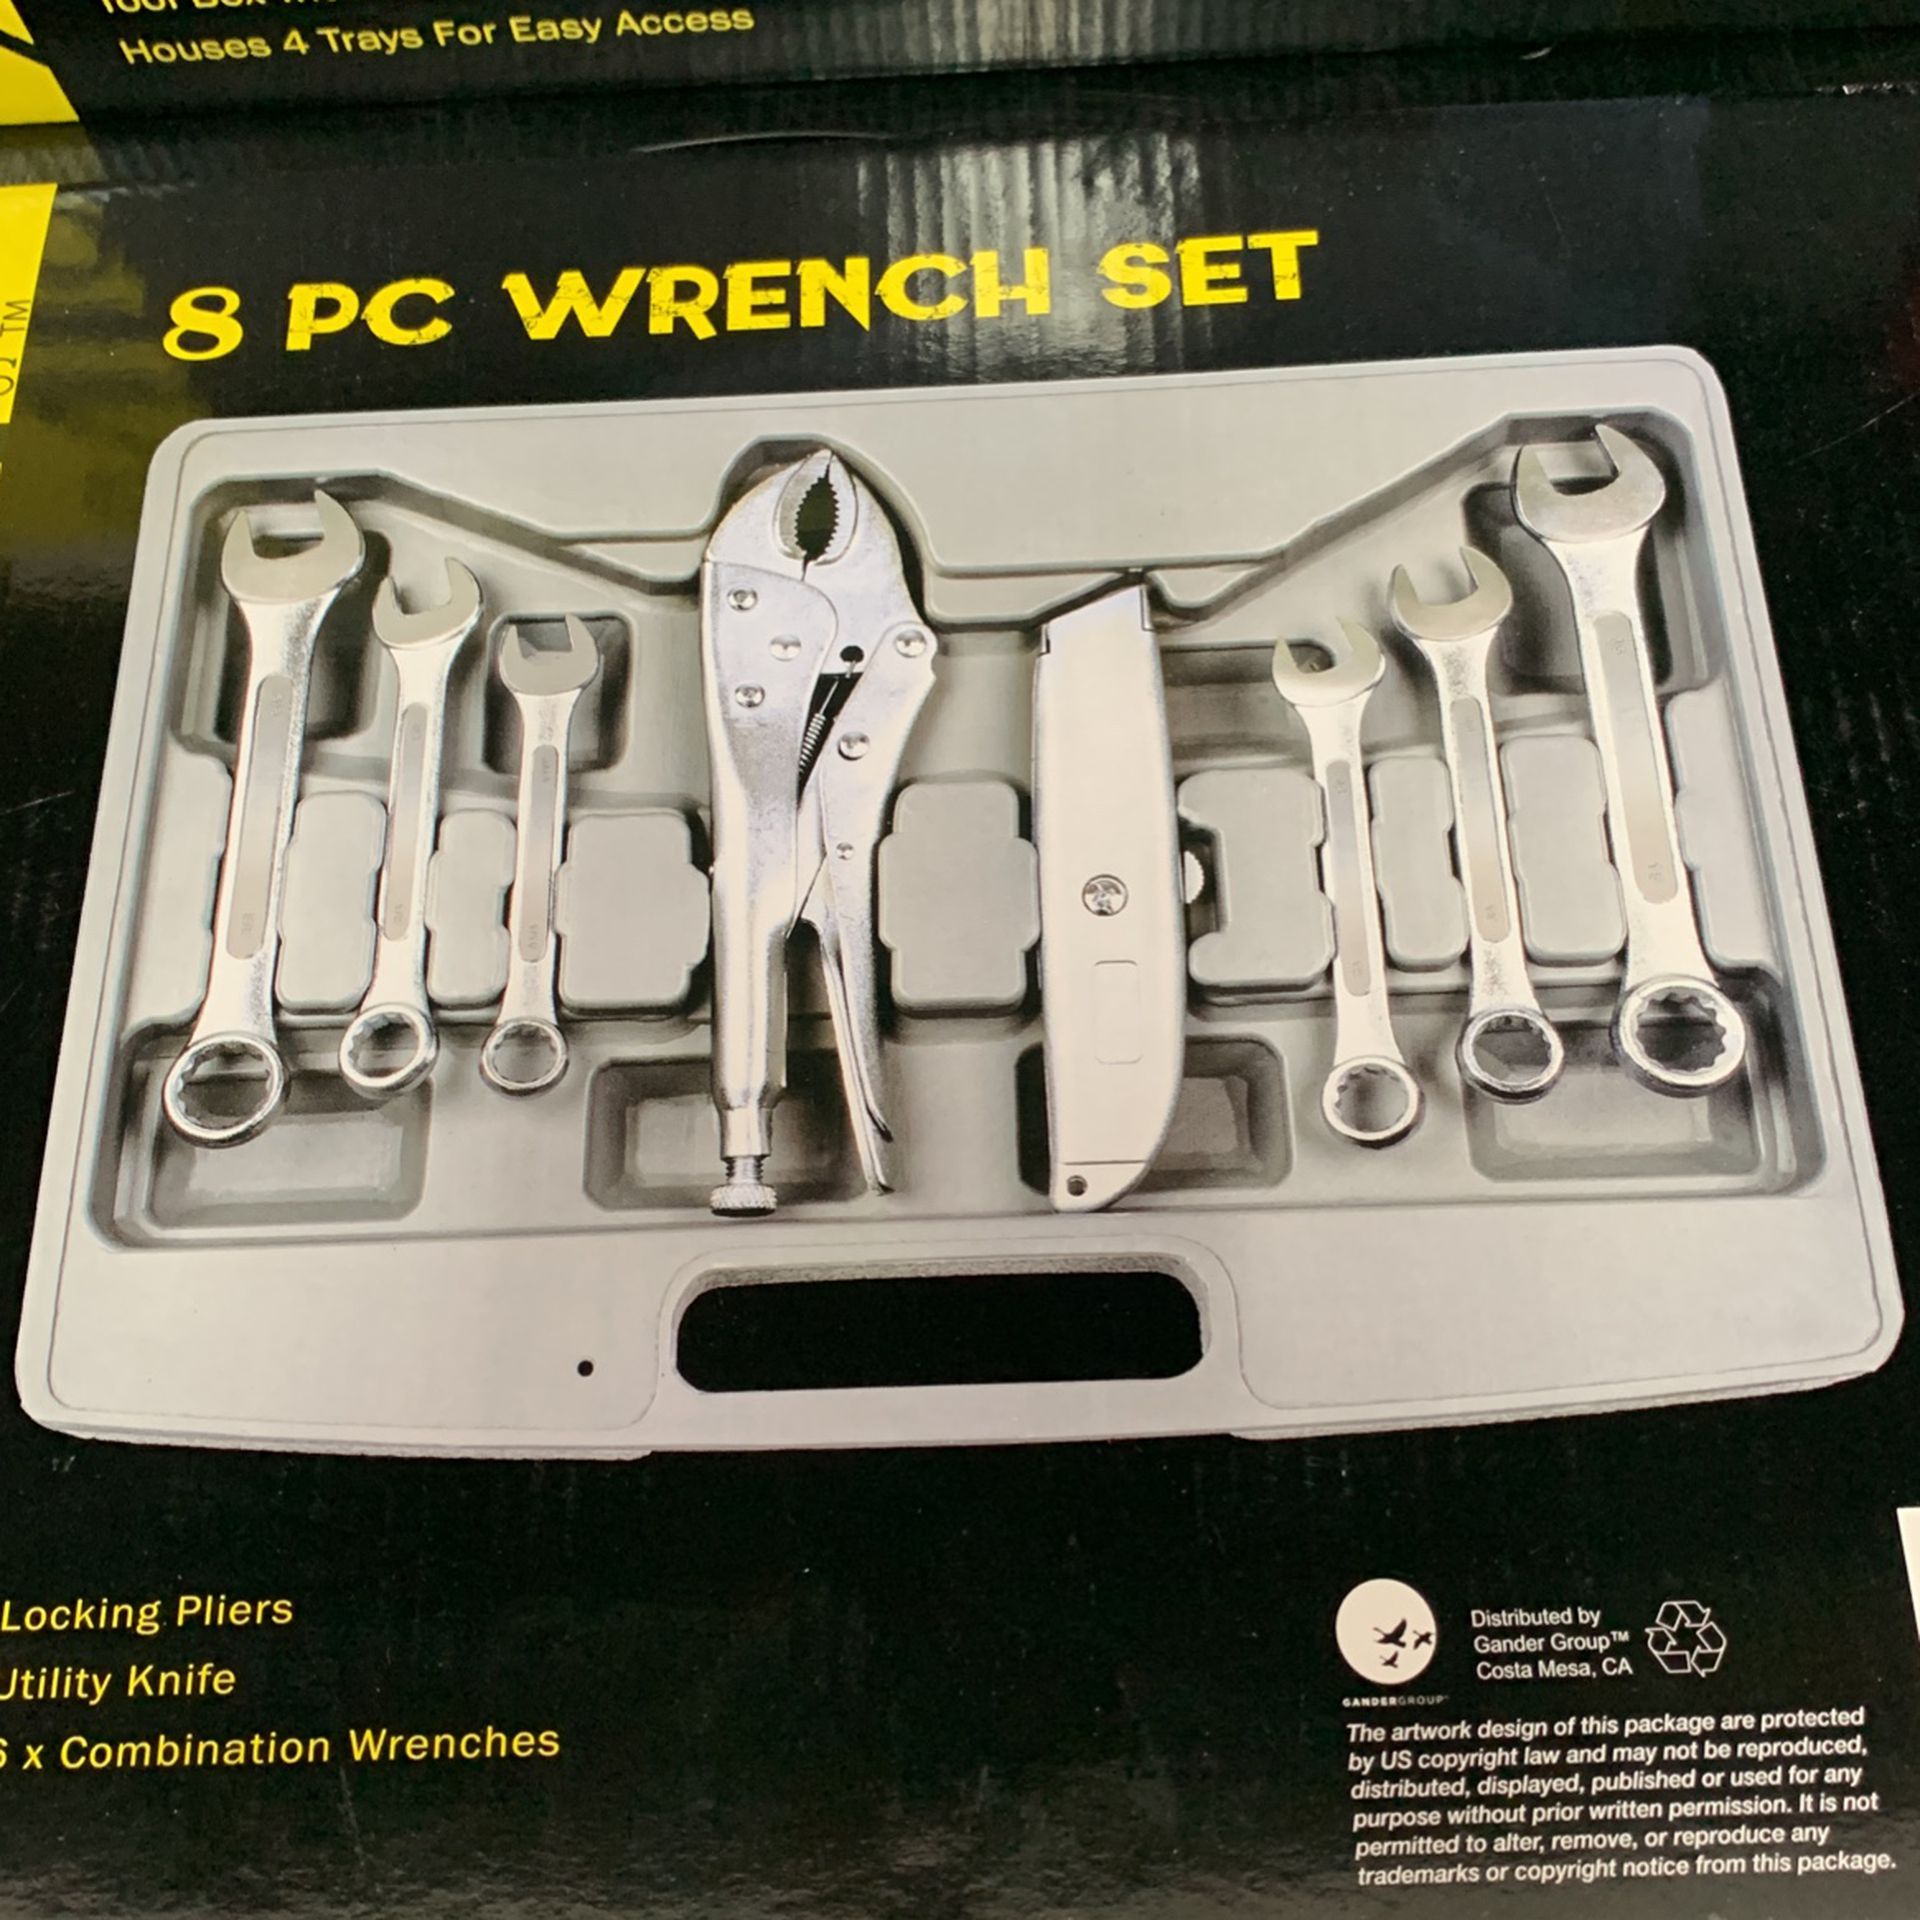 New 8-Pc Wrench & Visegrip & Knife Set!